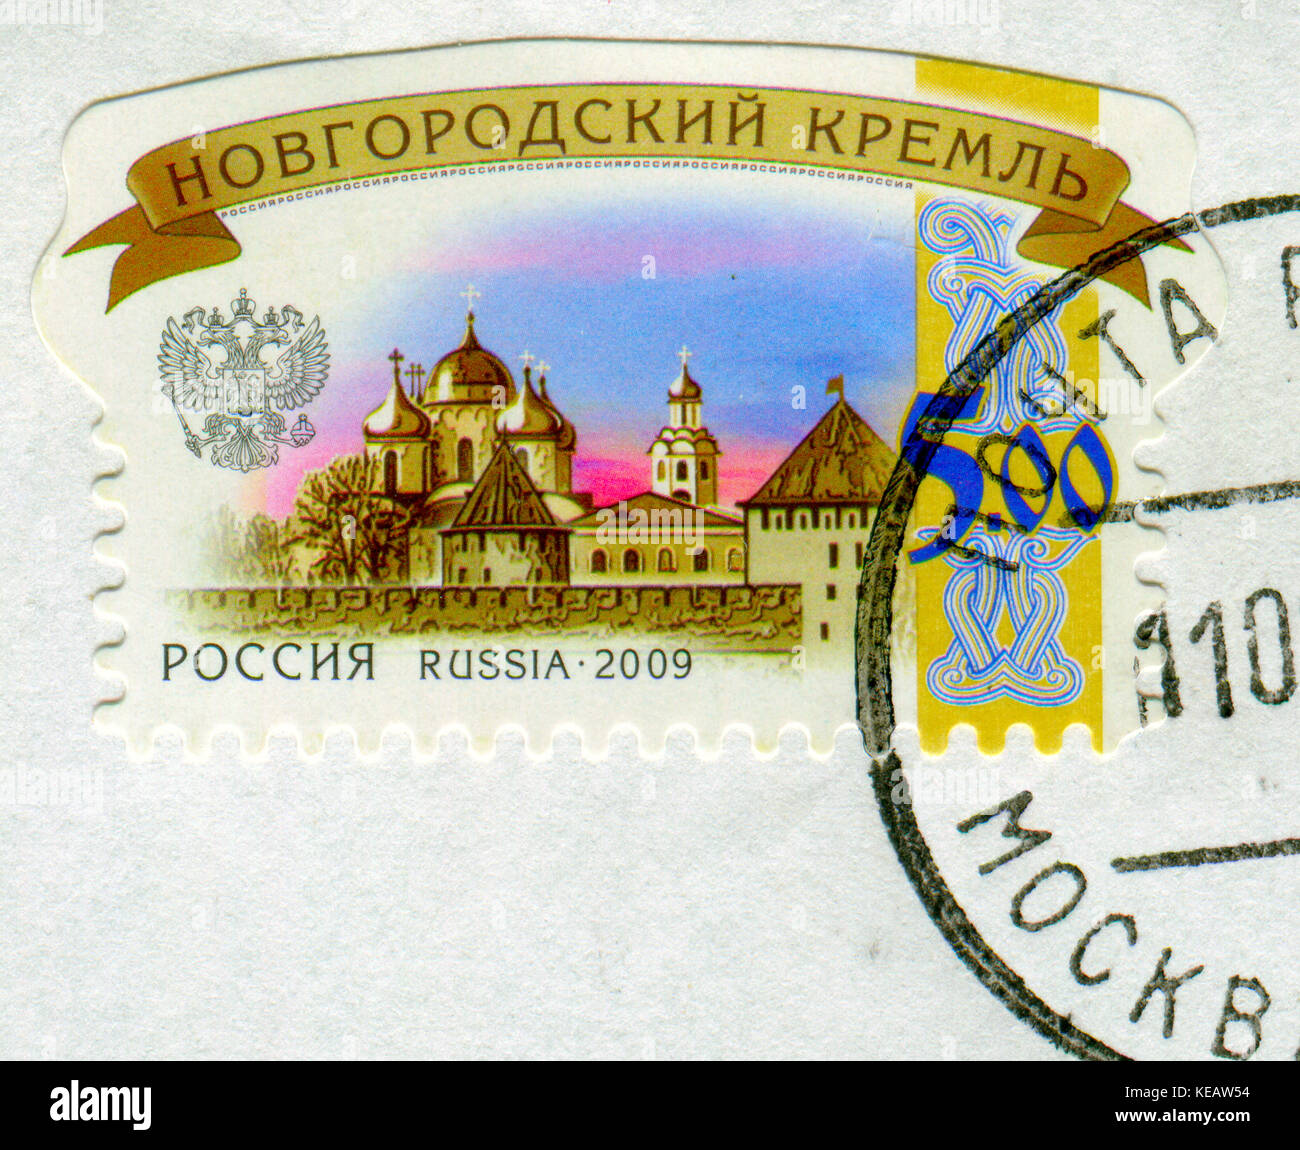 Gomel, Bélarus, 13 octobre 2017, de timbres en Russie montre l'image de novgorod kremlin, vers 2009. Banque D'Images